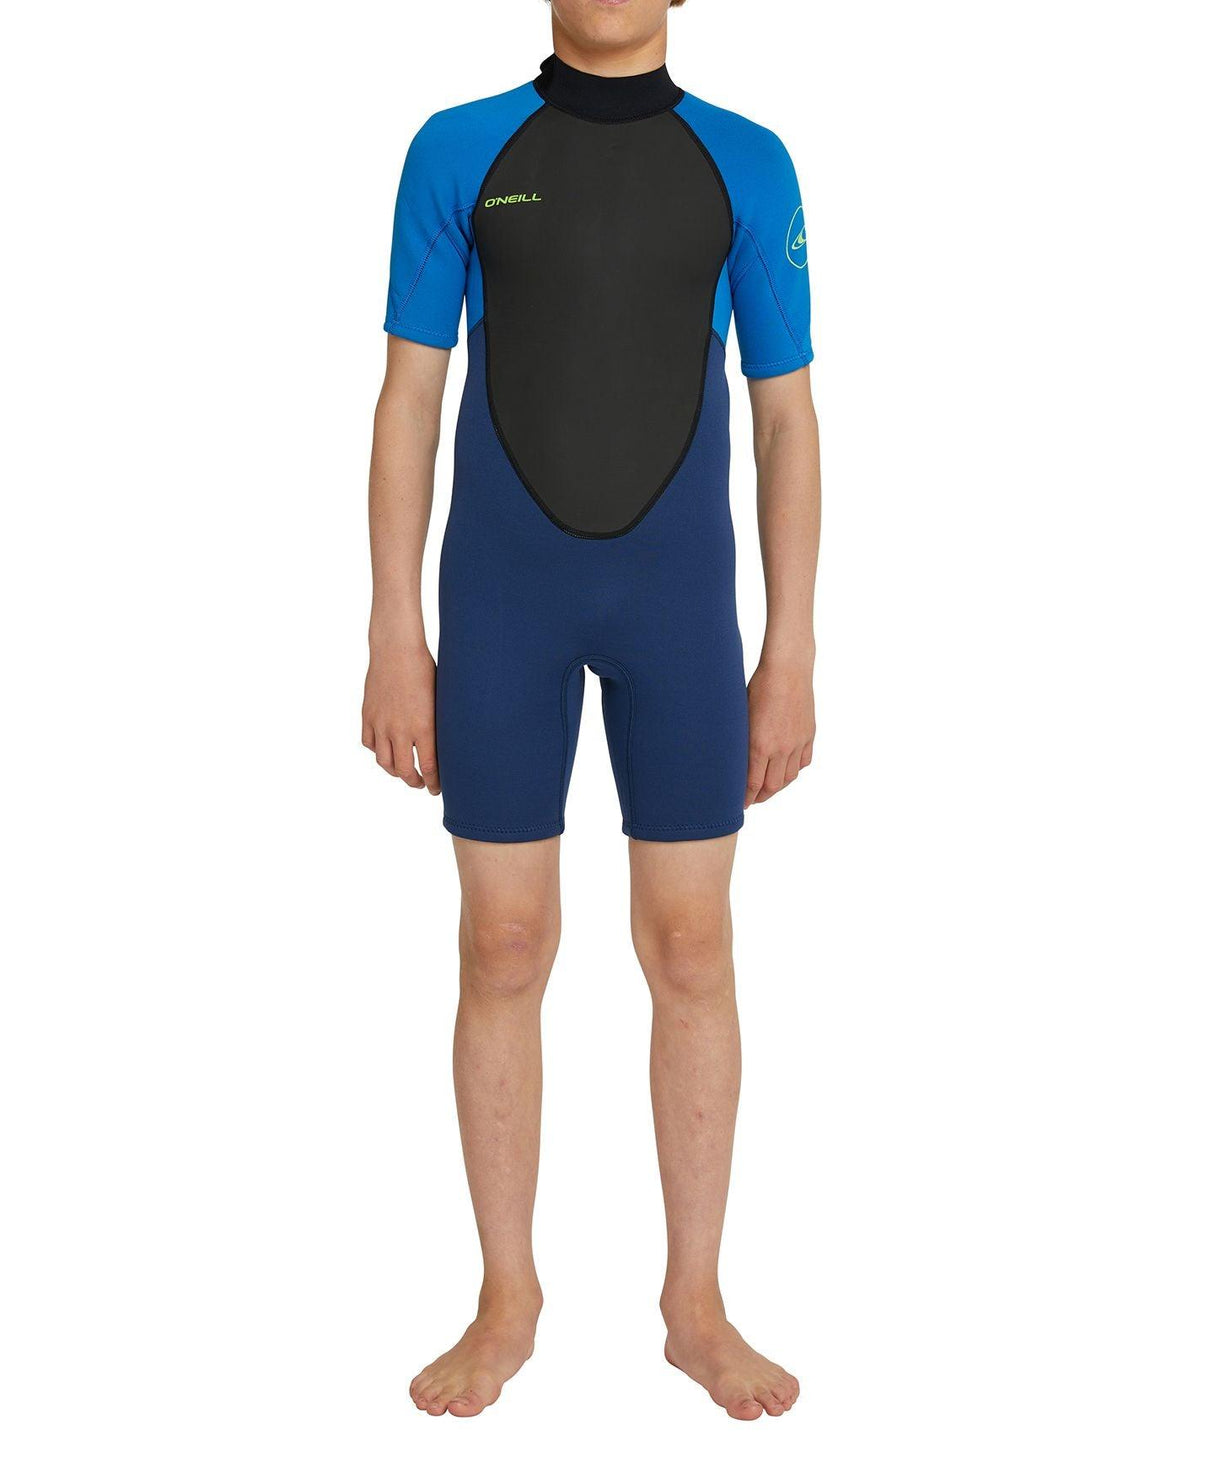 Boy's Reactor Spring Suit 2mm Short Sleeve Wetsuit - Beachin Surf